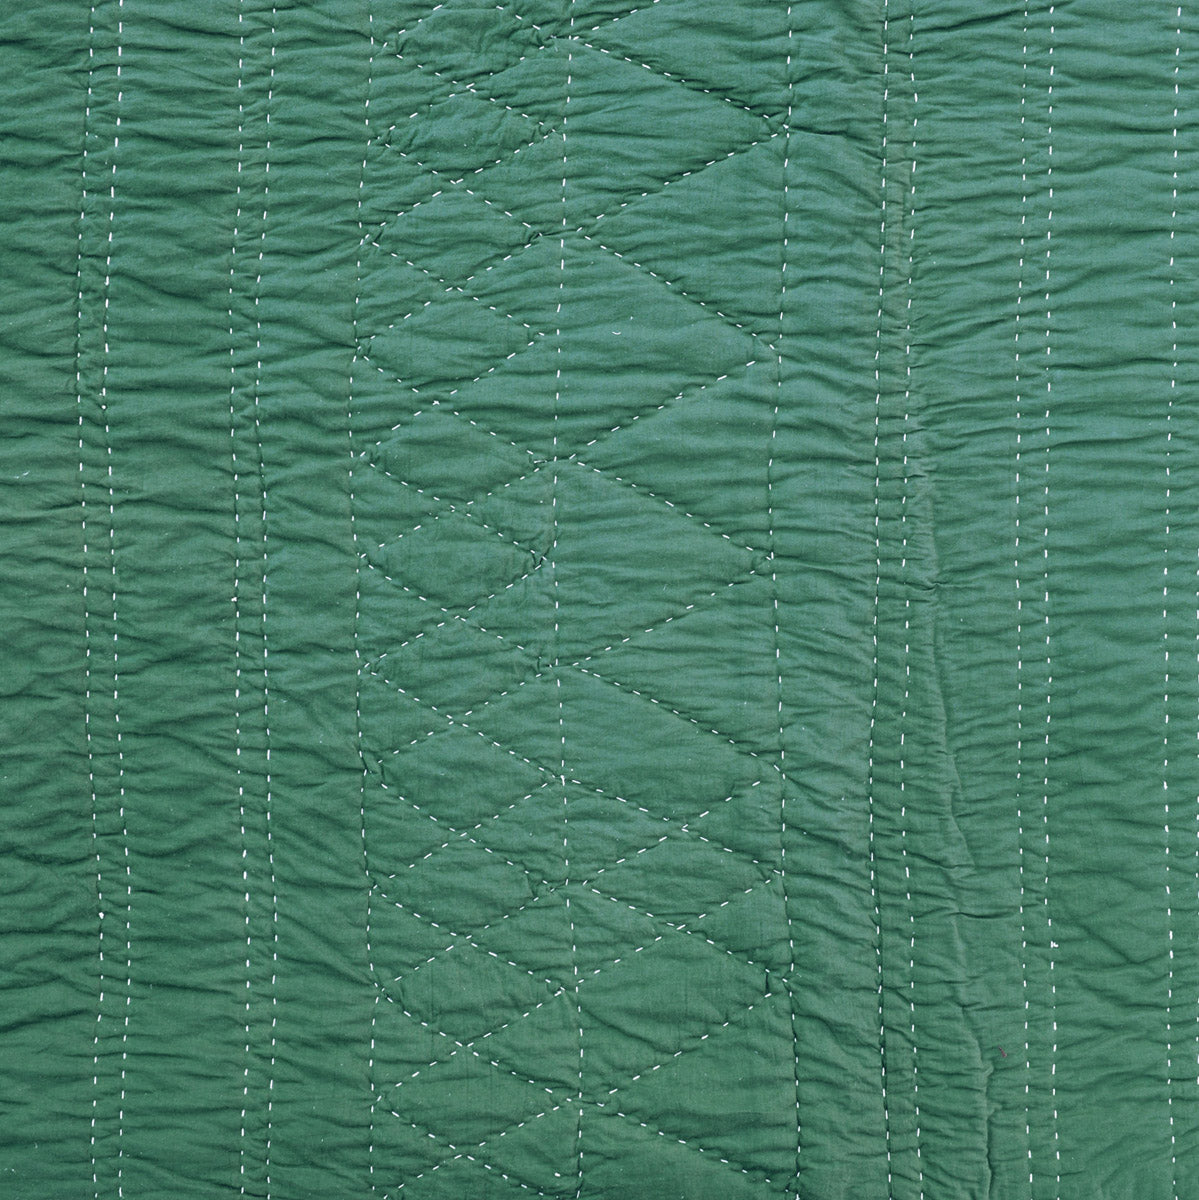 Aztec, Tropical Green, cotton kantha quilt